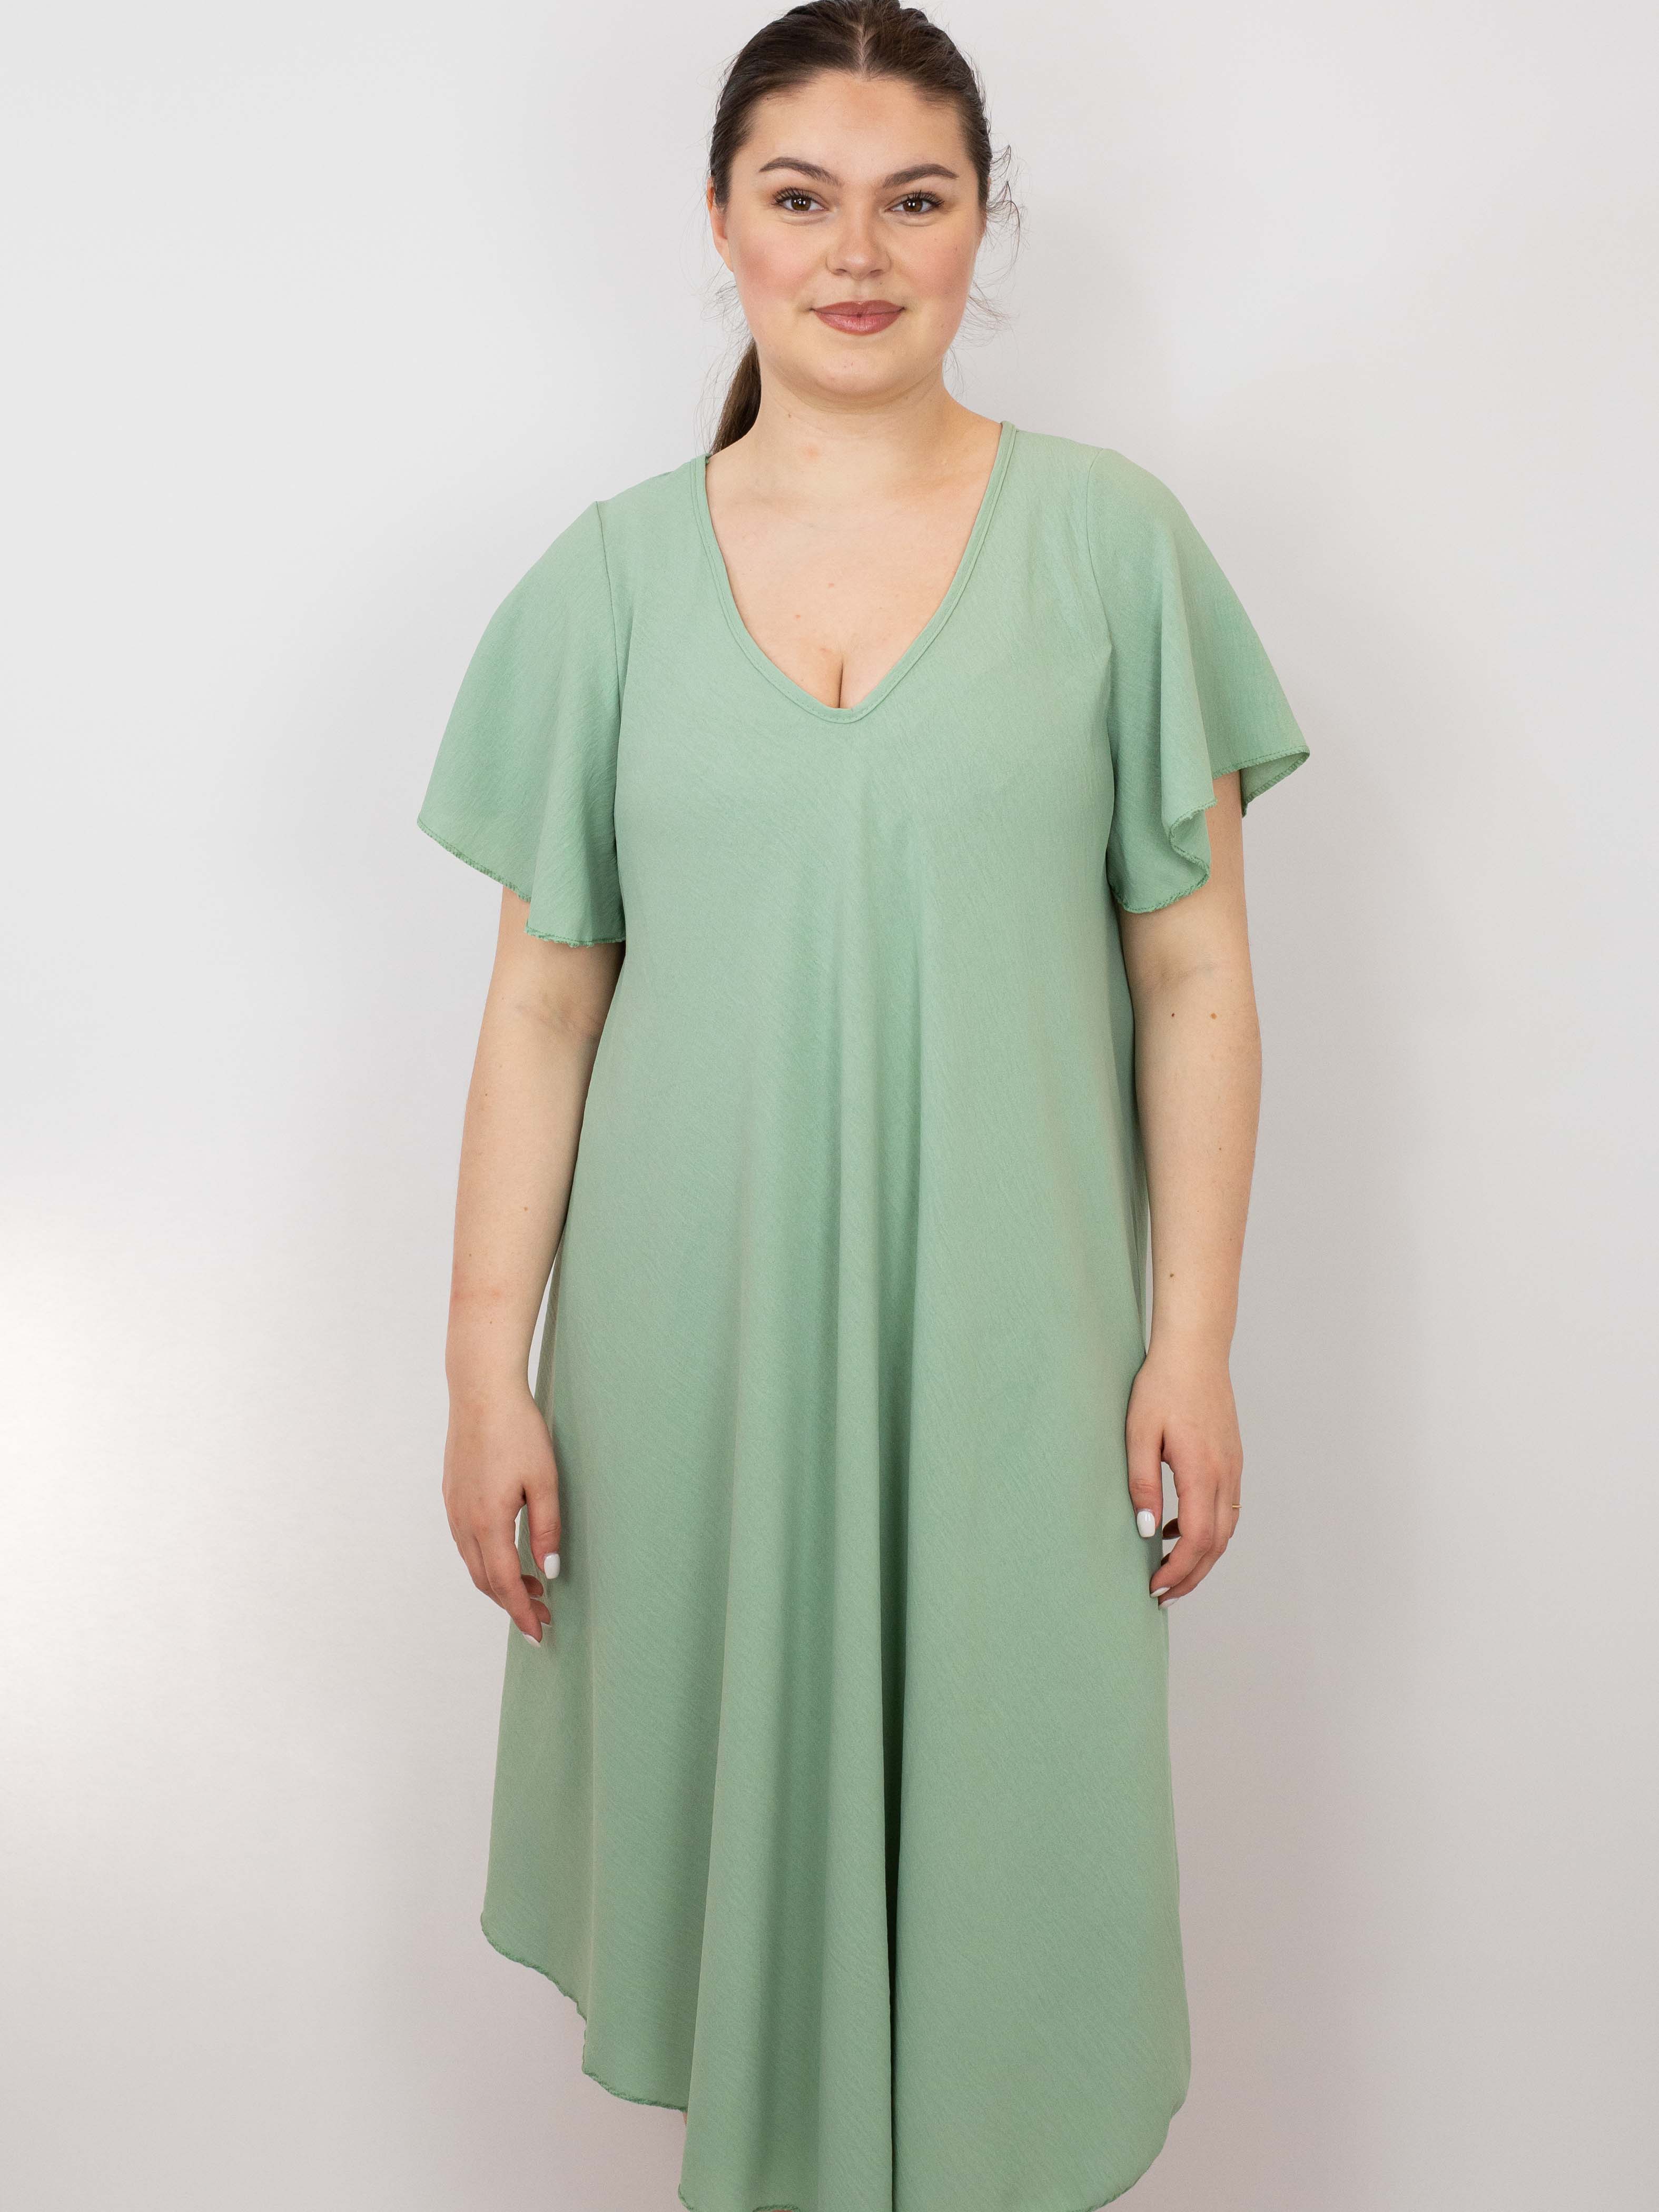 A-shape kjole - Brystmål 140cm - Ingen returret